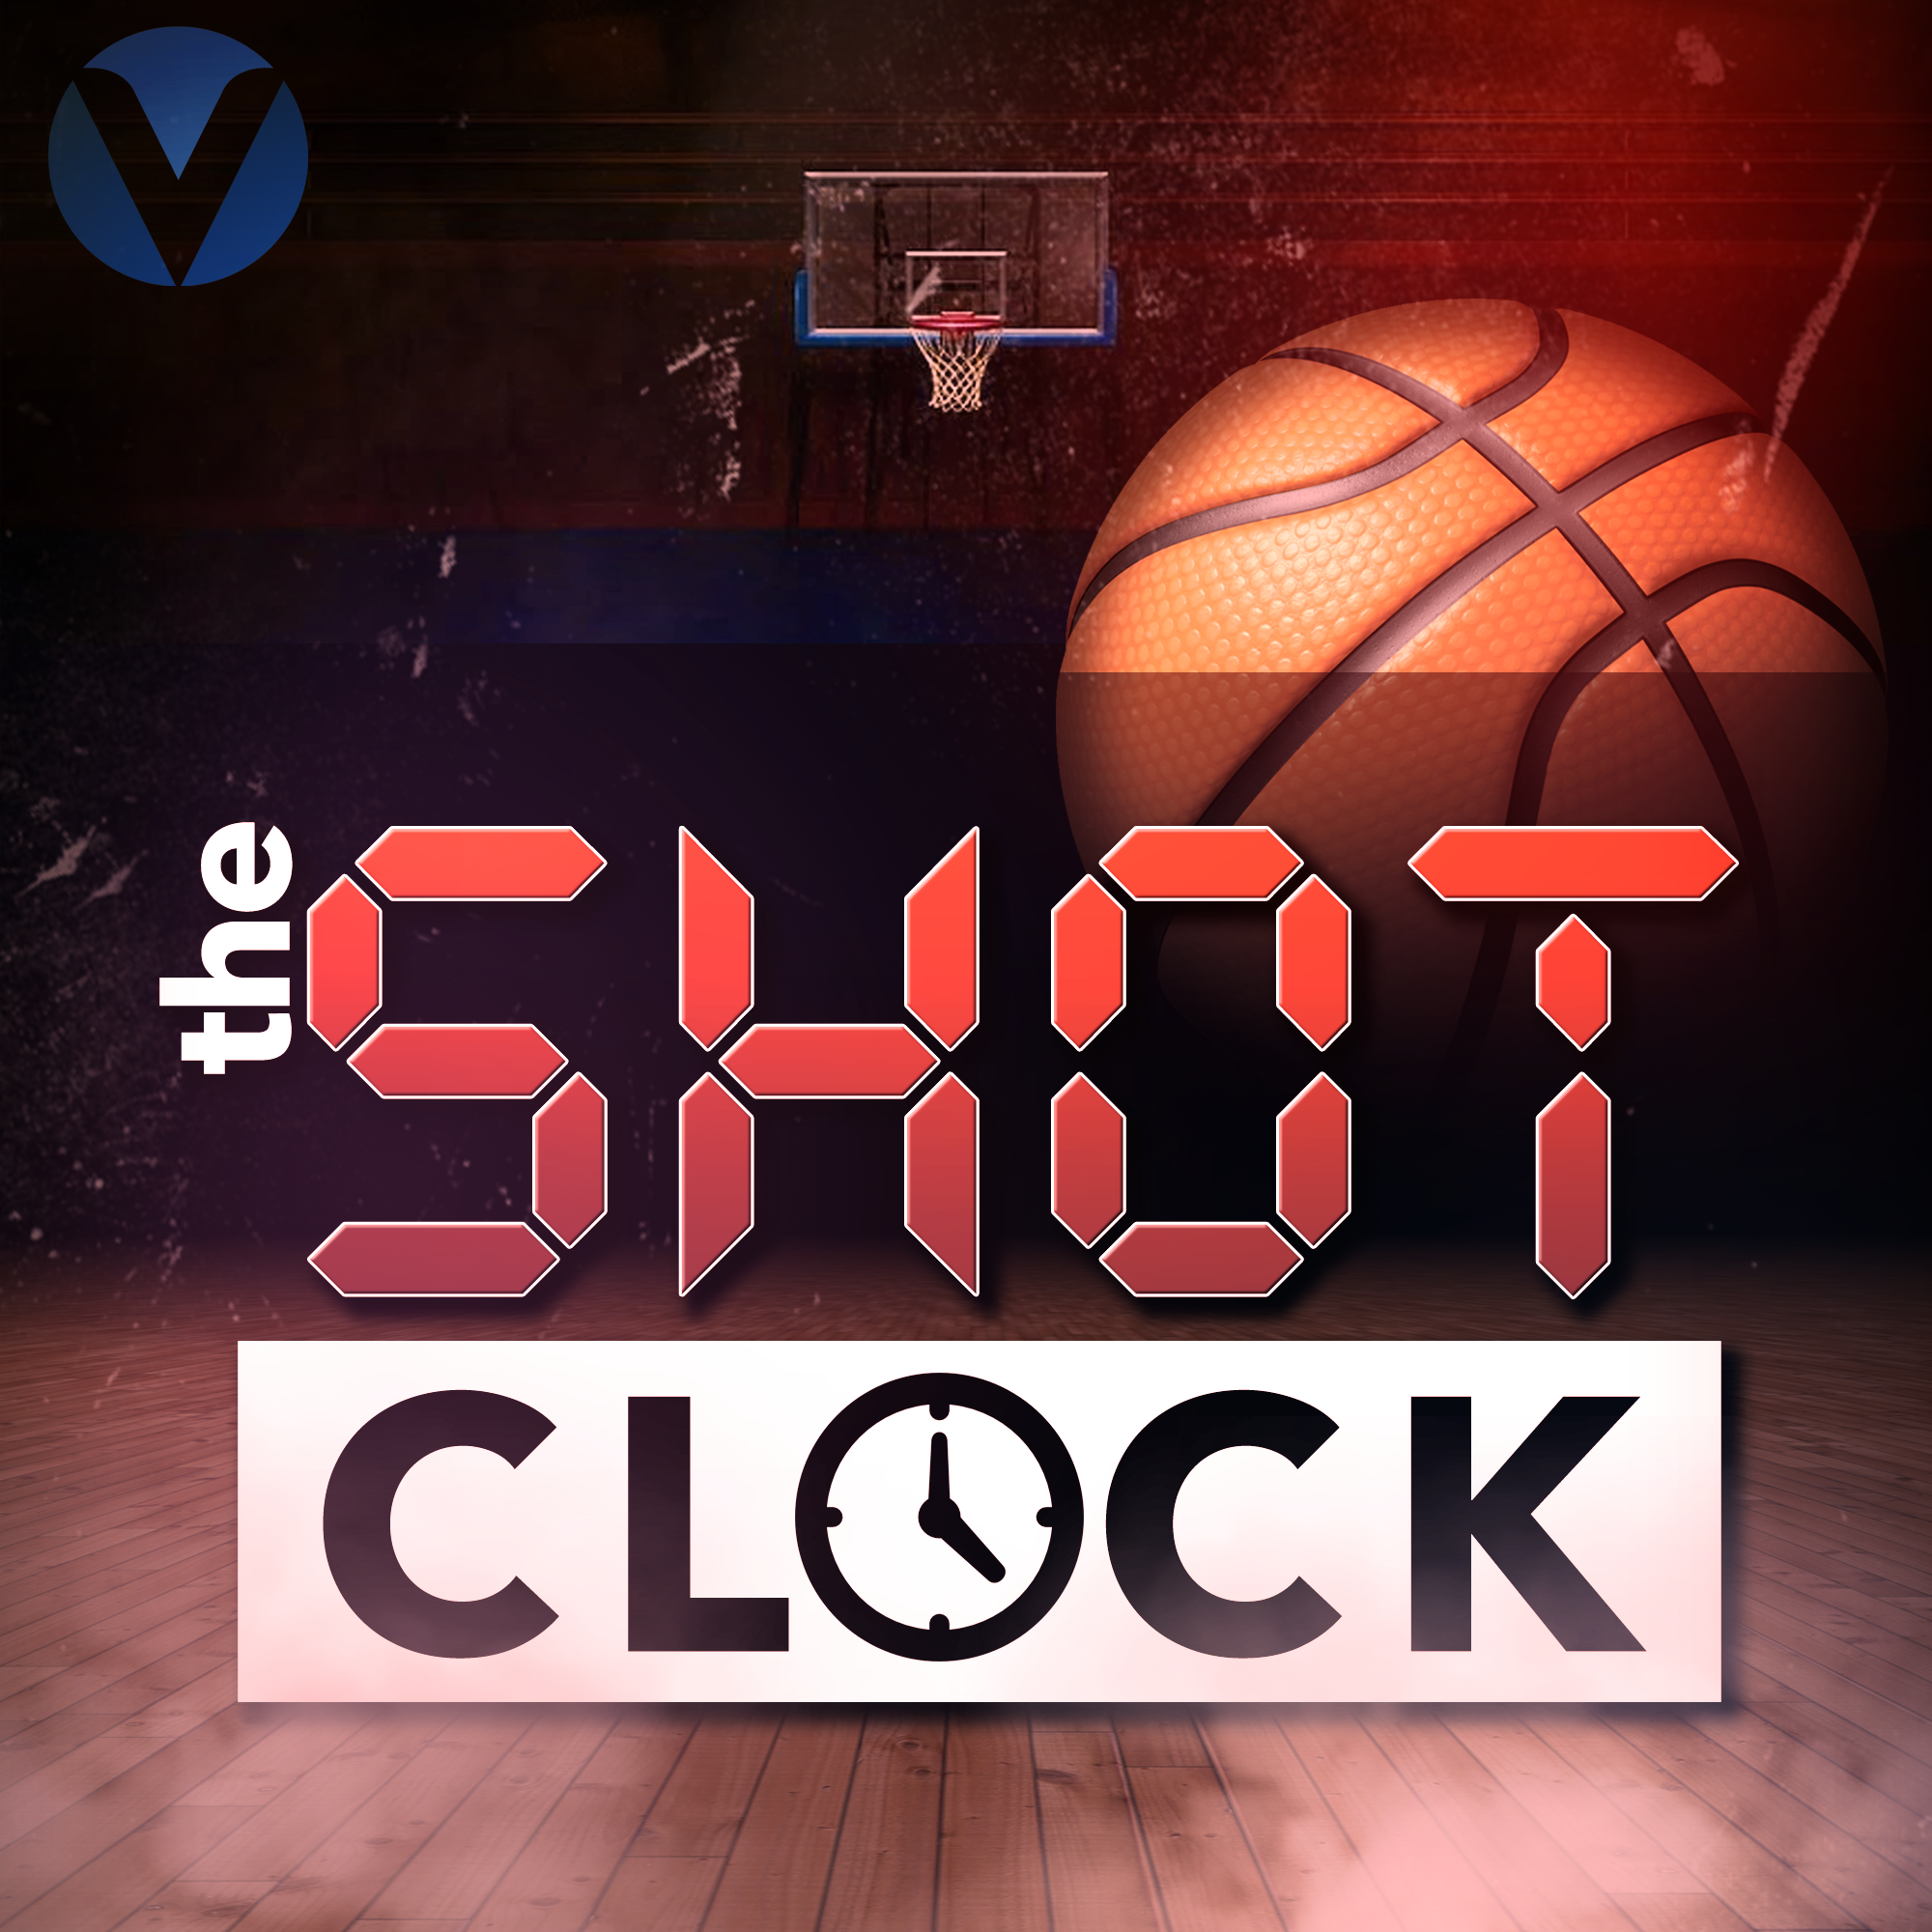 The Shot Clock